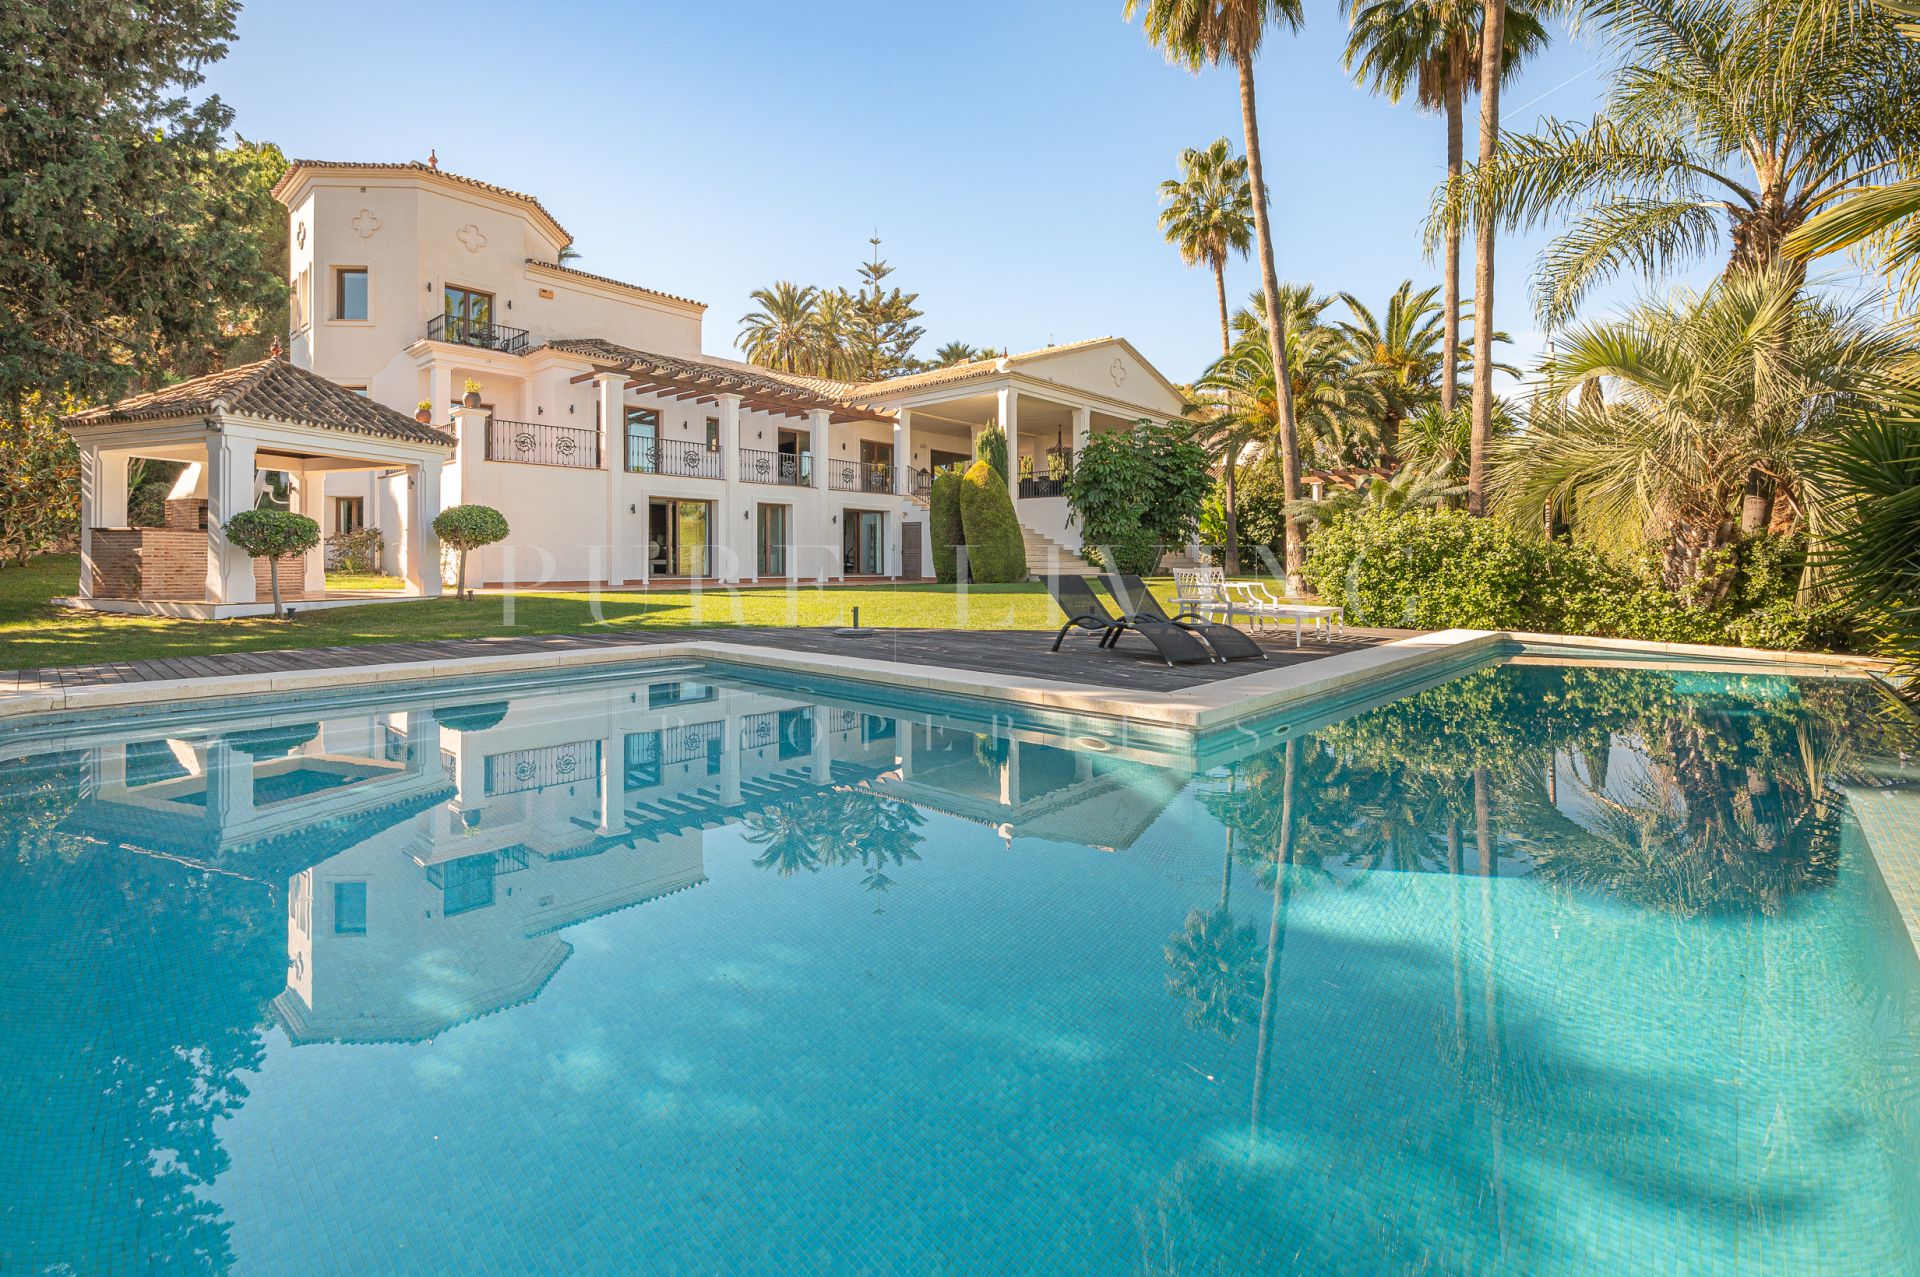 Magnificent contemporary classic six bedroom villa for sale in Las Brisas, Nueva Andalucia